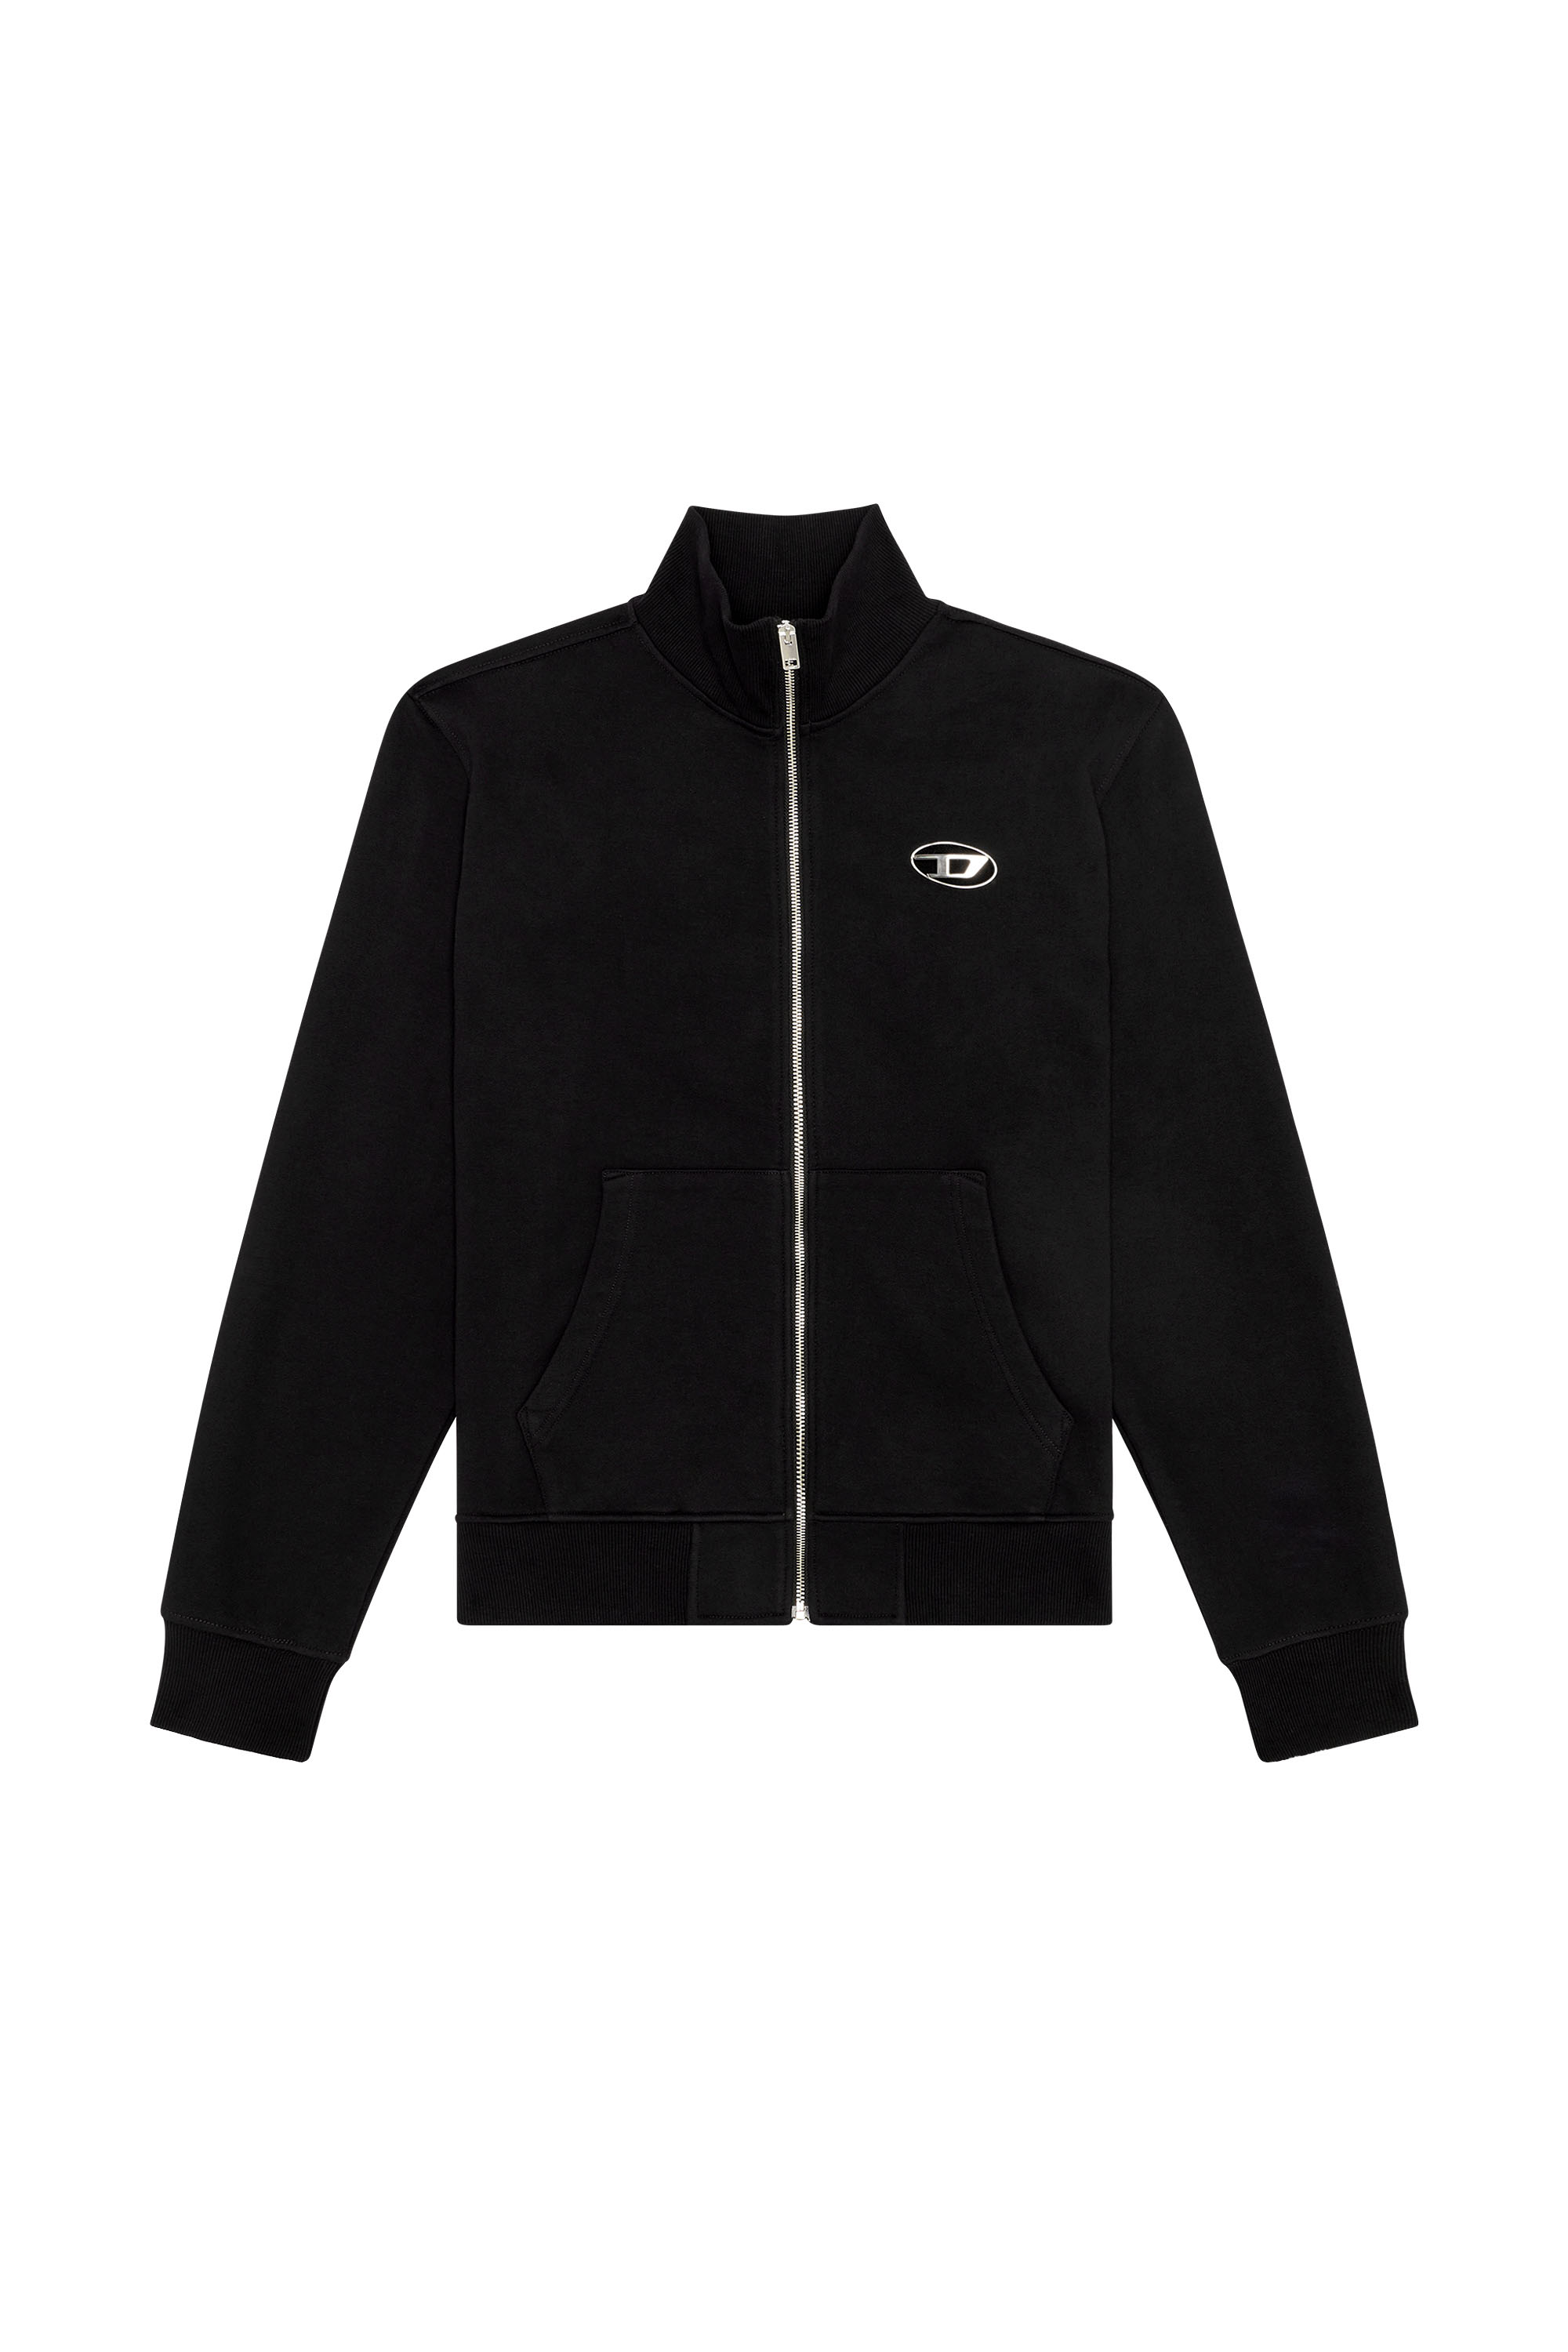 Dtydtpe 2024 Clearance Sales, Zip Up Hoodie Men's Solid Color Personality  Dark Style Full Body Zipper Long Hooded Sweater Jacket Hoodies for Men 